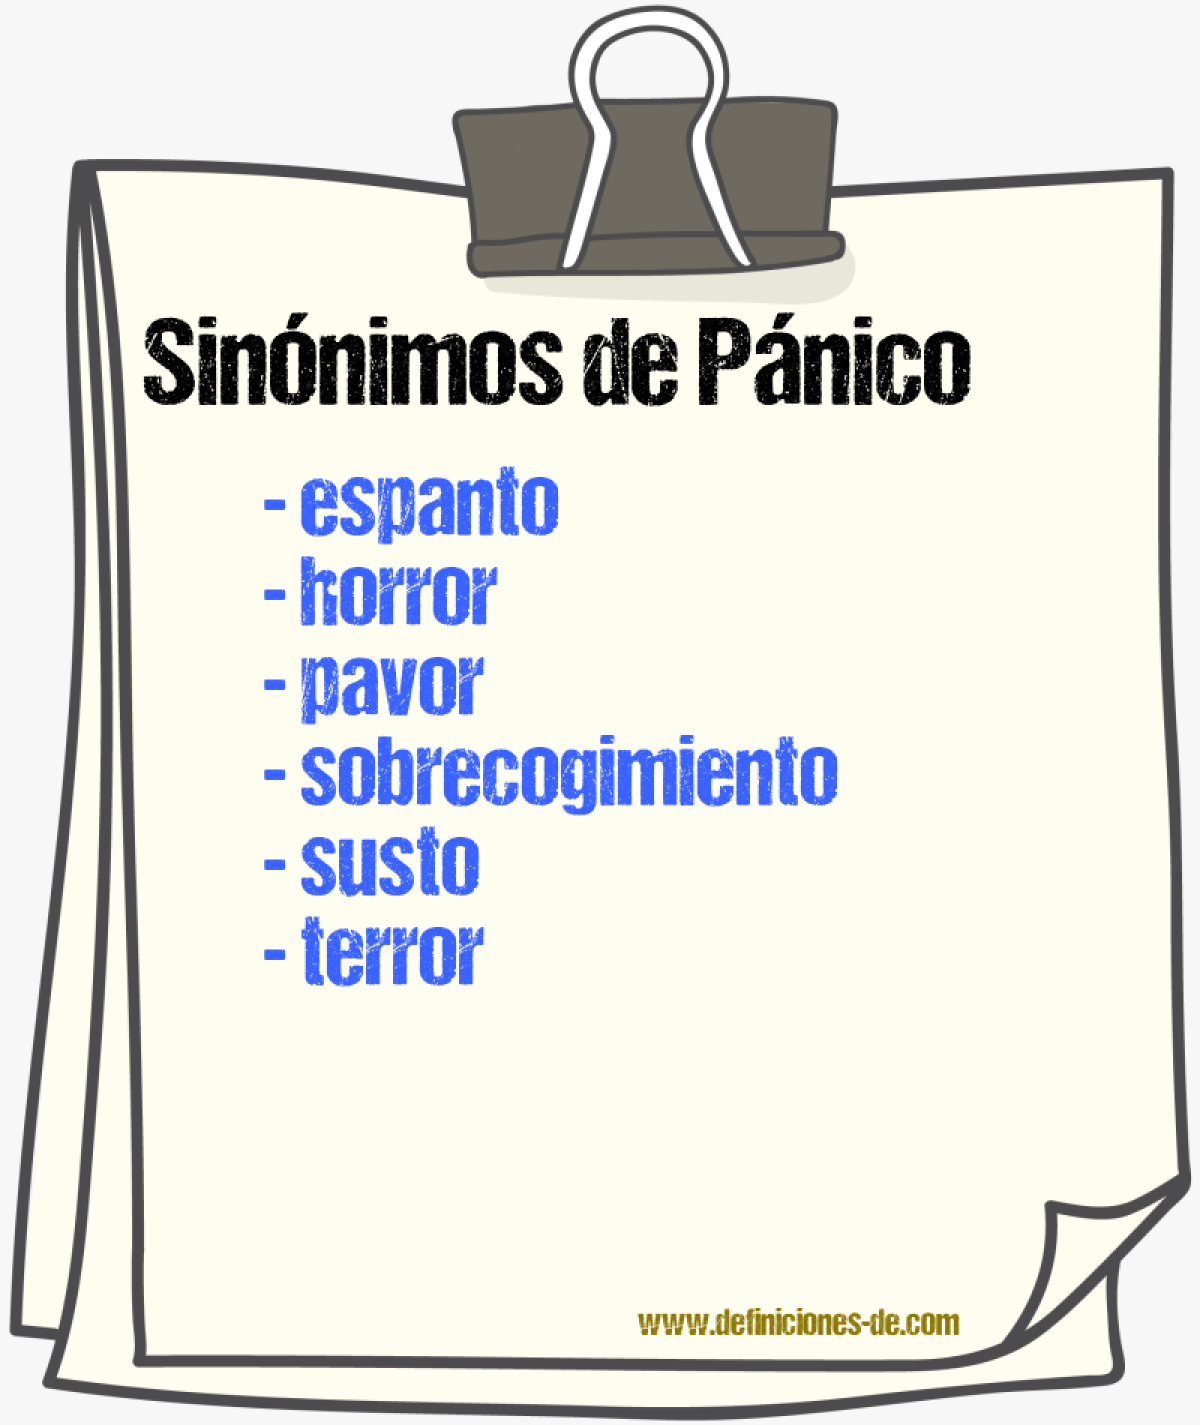 Sinónimos de pánico